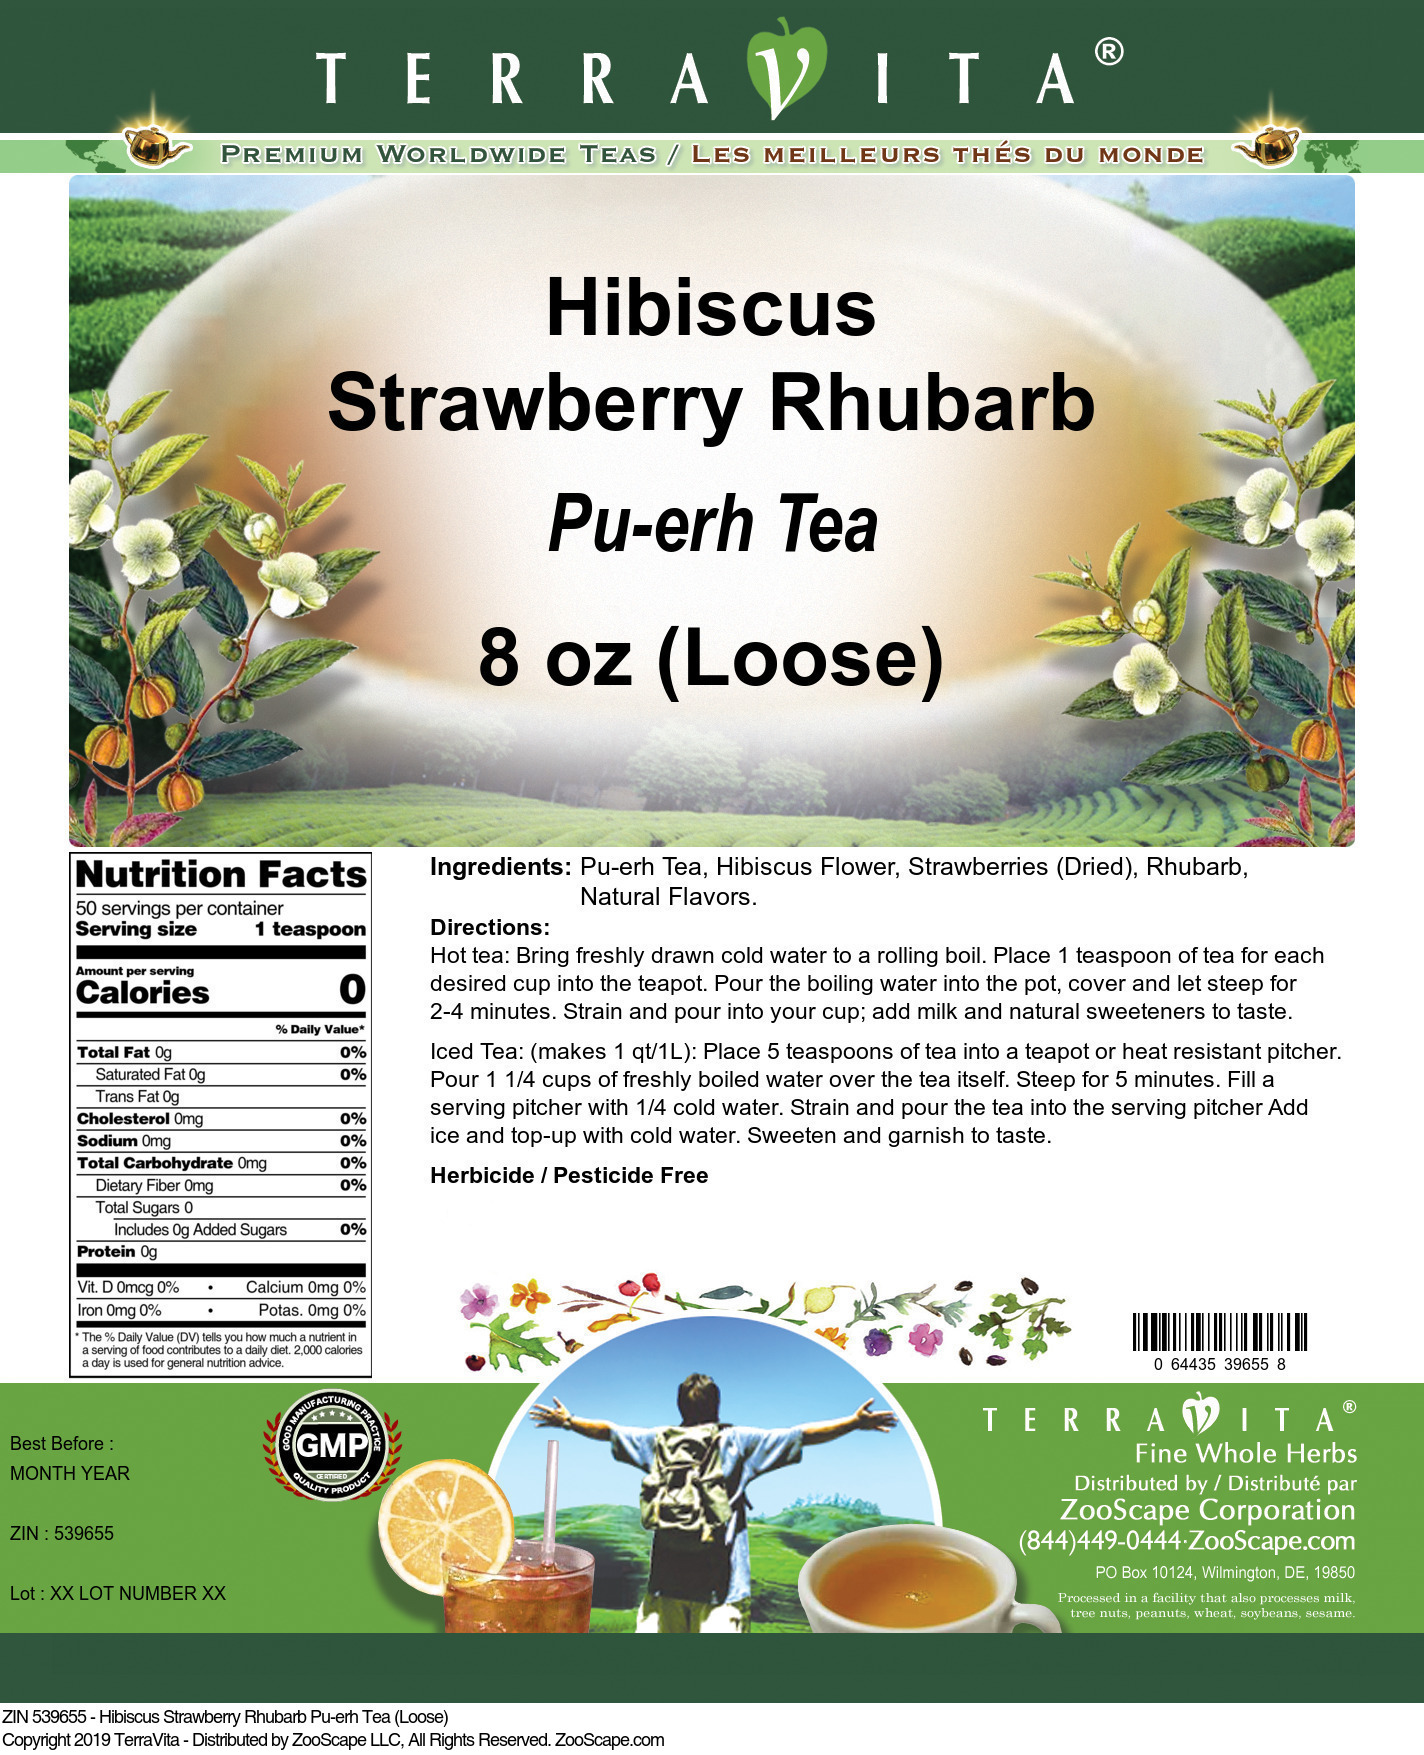 Hibiscus Strawberry Rhubarb Pu-erh Tea (Loose) - Label